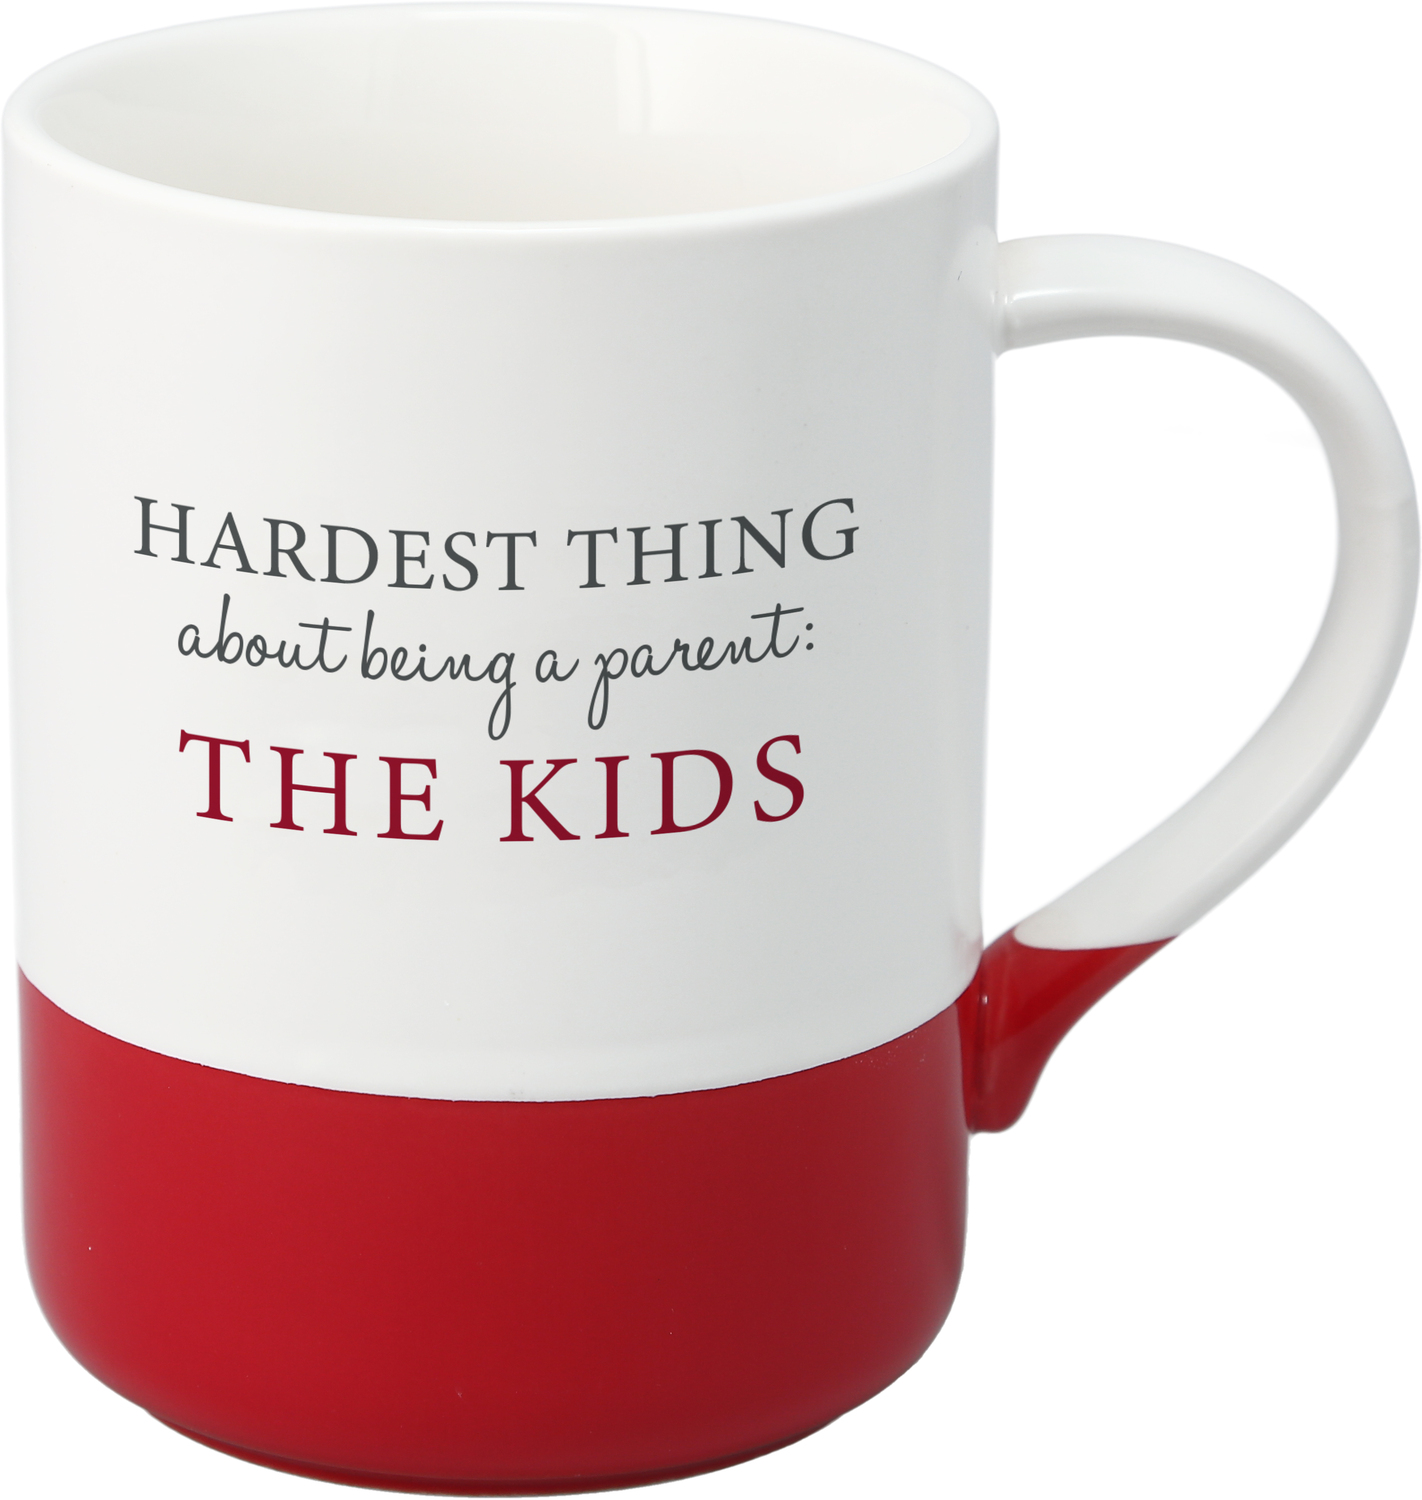 The Kids by A-Parent-ly - The Kids - 18 oz Mug